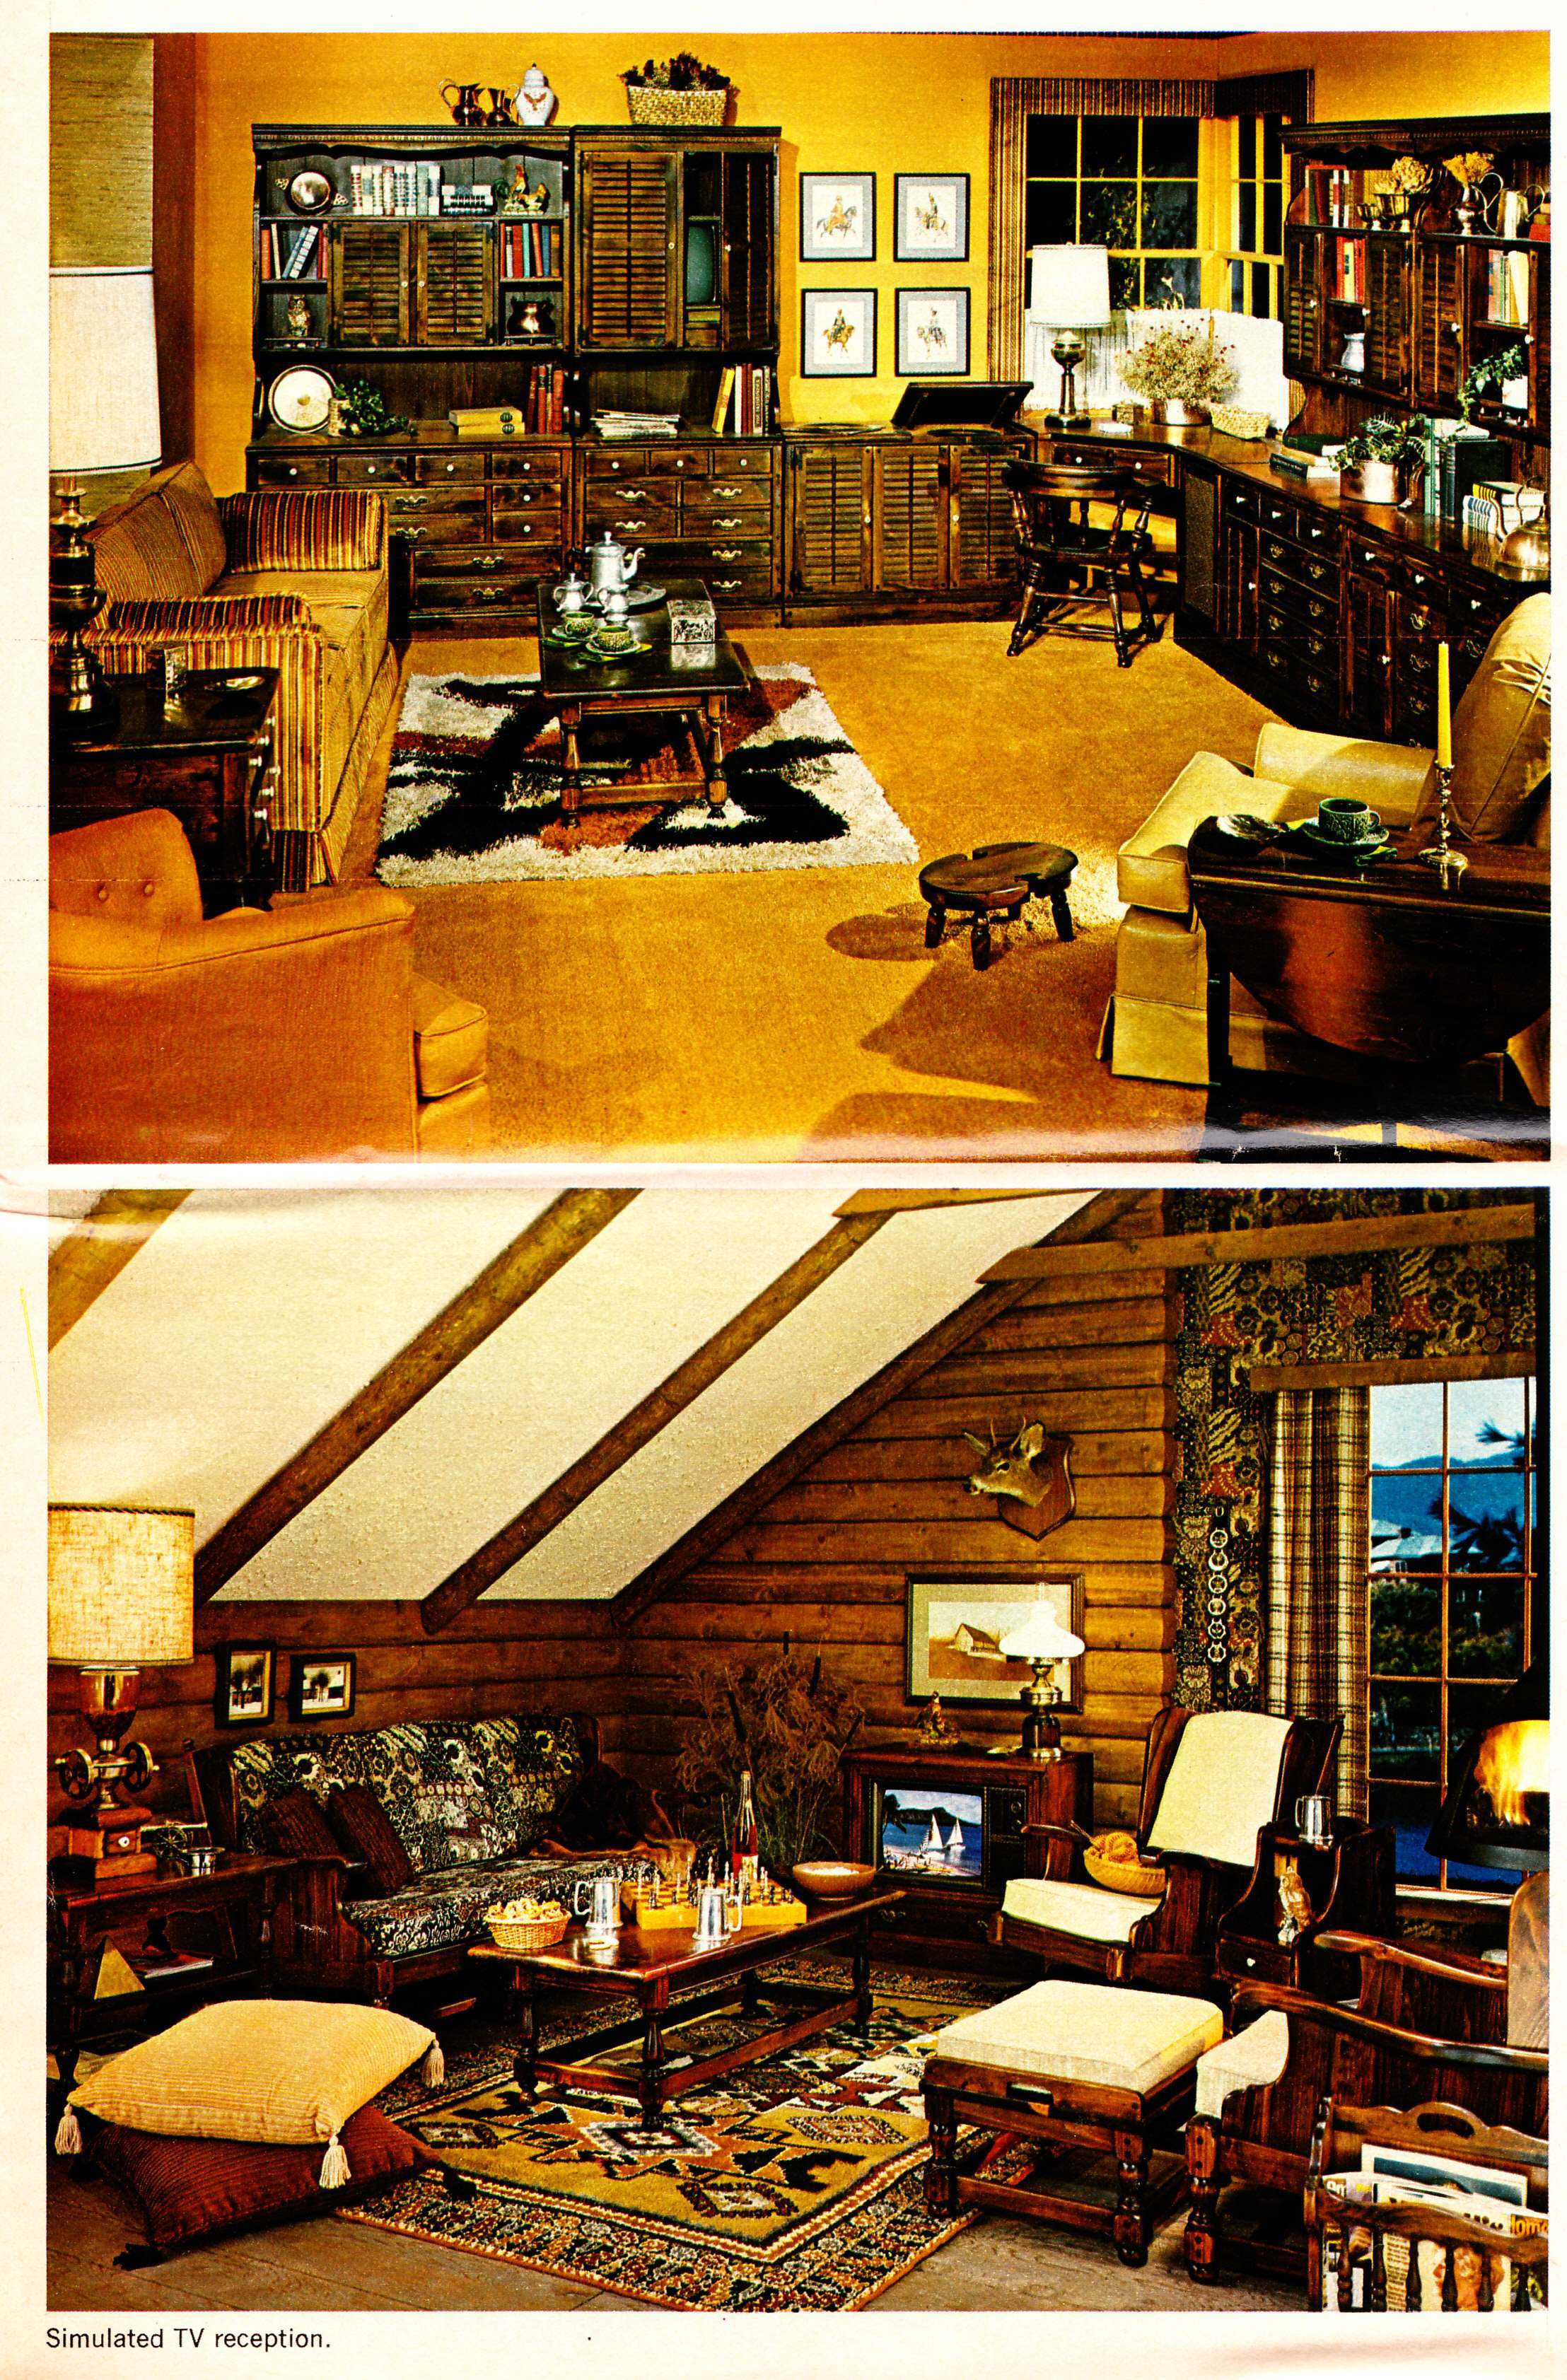 1975 interior decor furnishing allen ethan styles flashbak furniture retrospace 1970s reddit houses interiors advertising retro